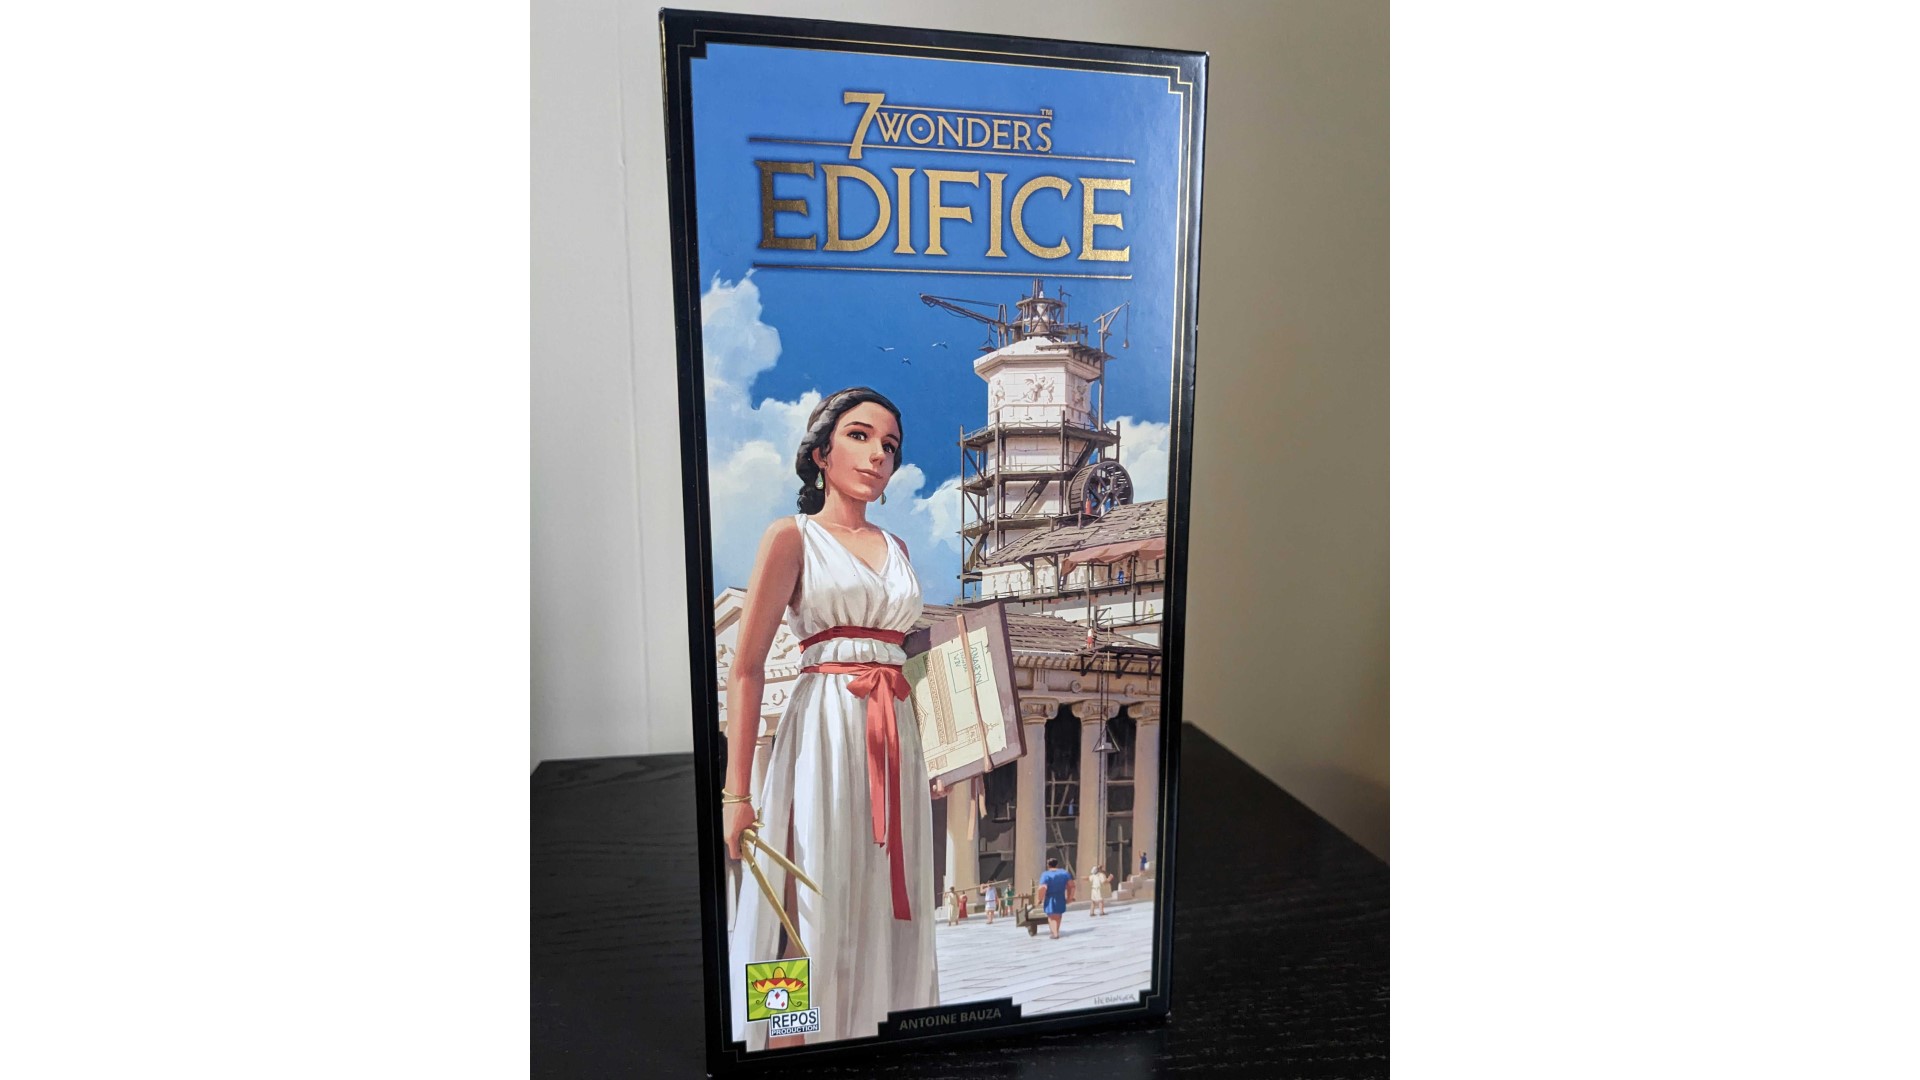 7 Wonders Edifice review copy box